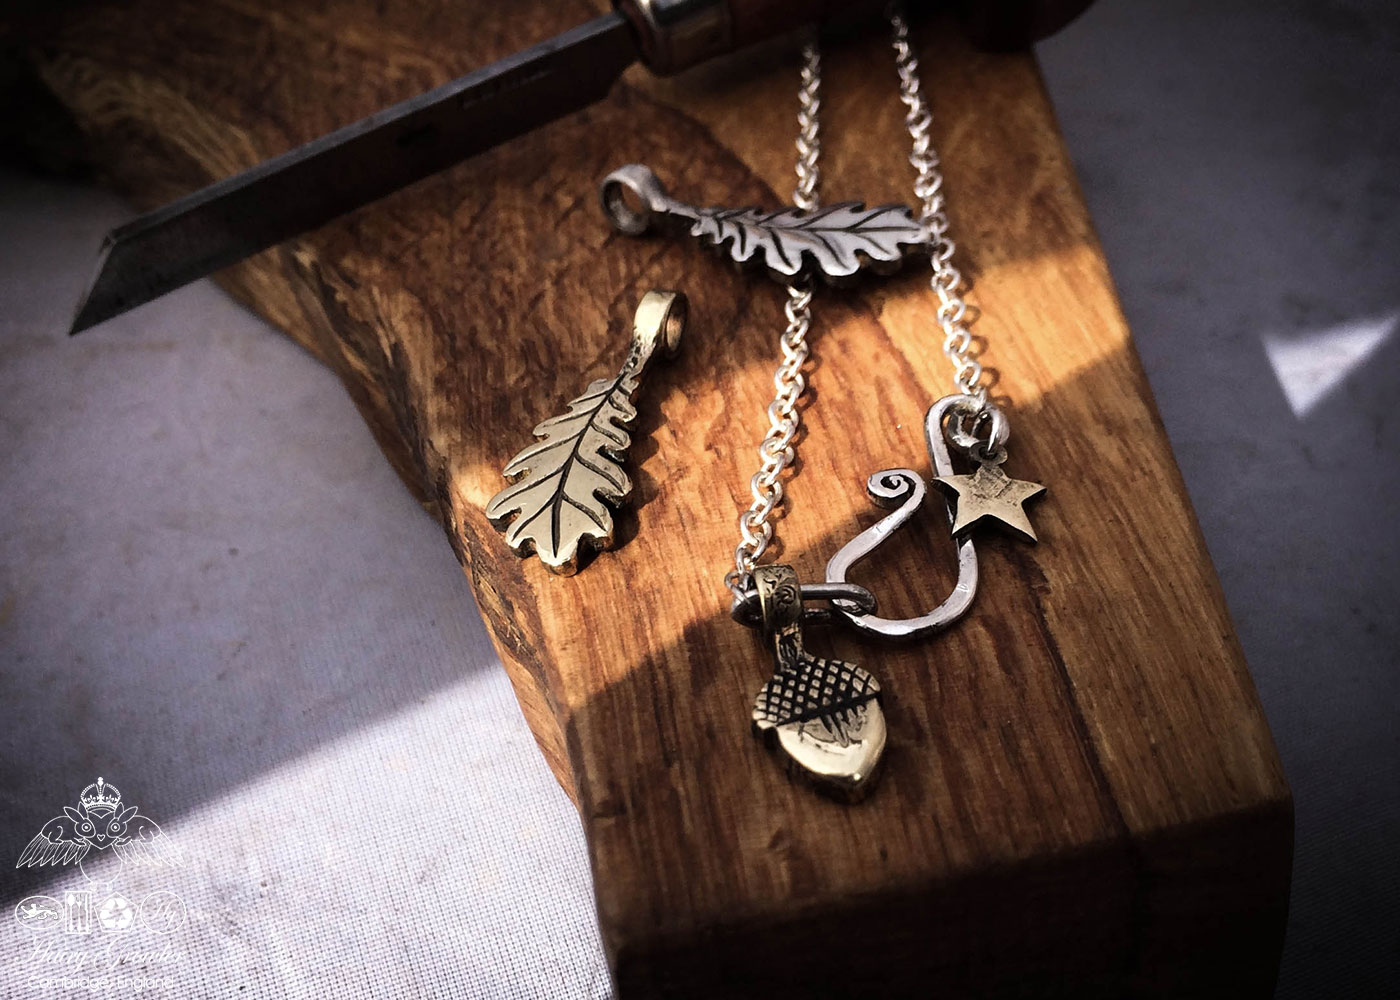 handmade bronze acorn charm for a tree sculpture, necklace or bracelet